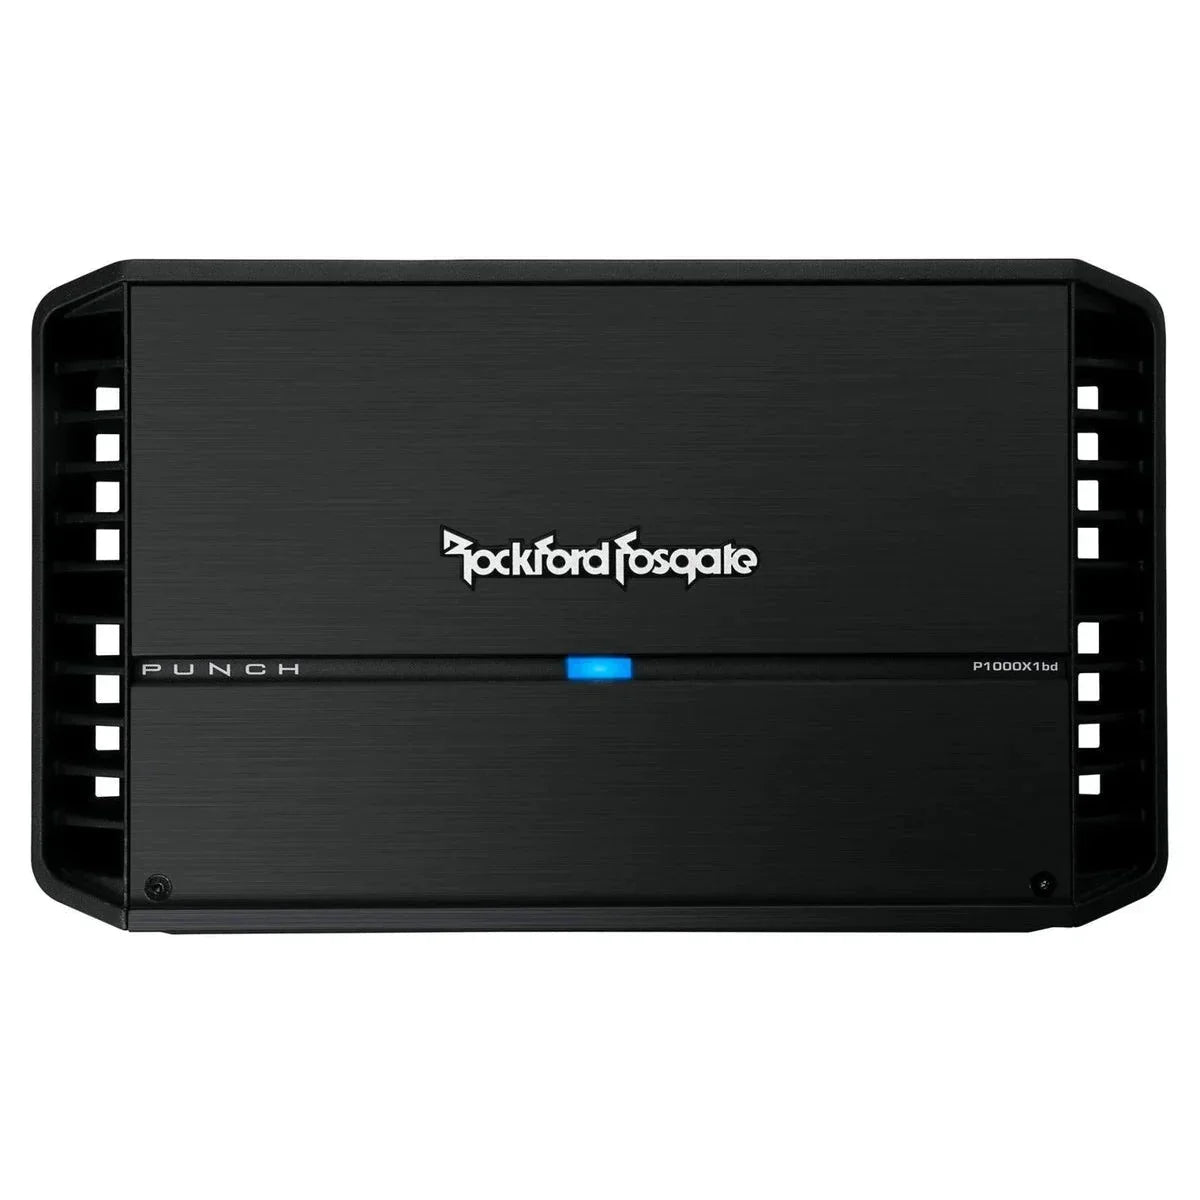 Rockford Fosgate-Punch P1000X1bd-1-Kanal Verstärker-Masori.de